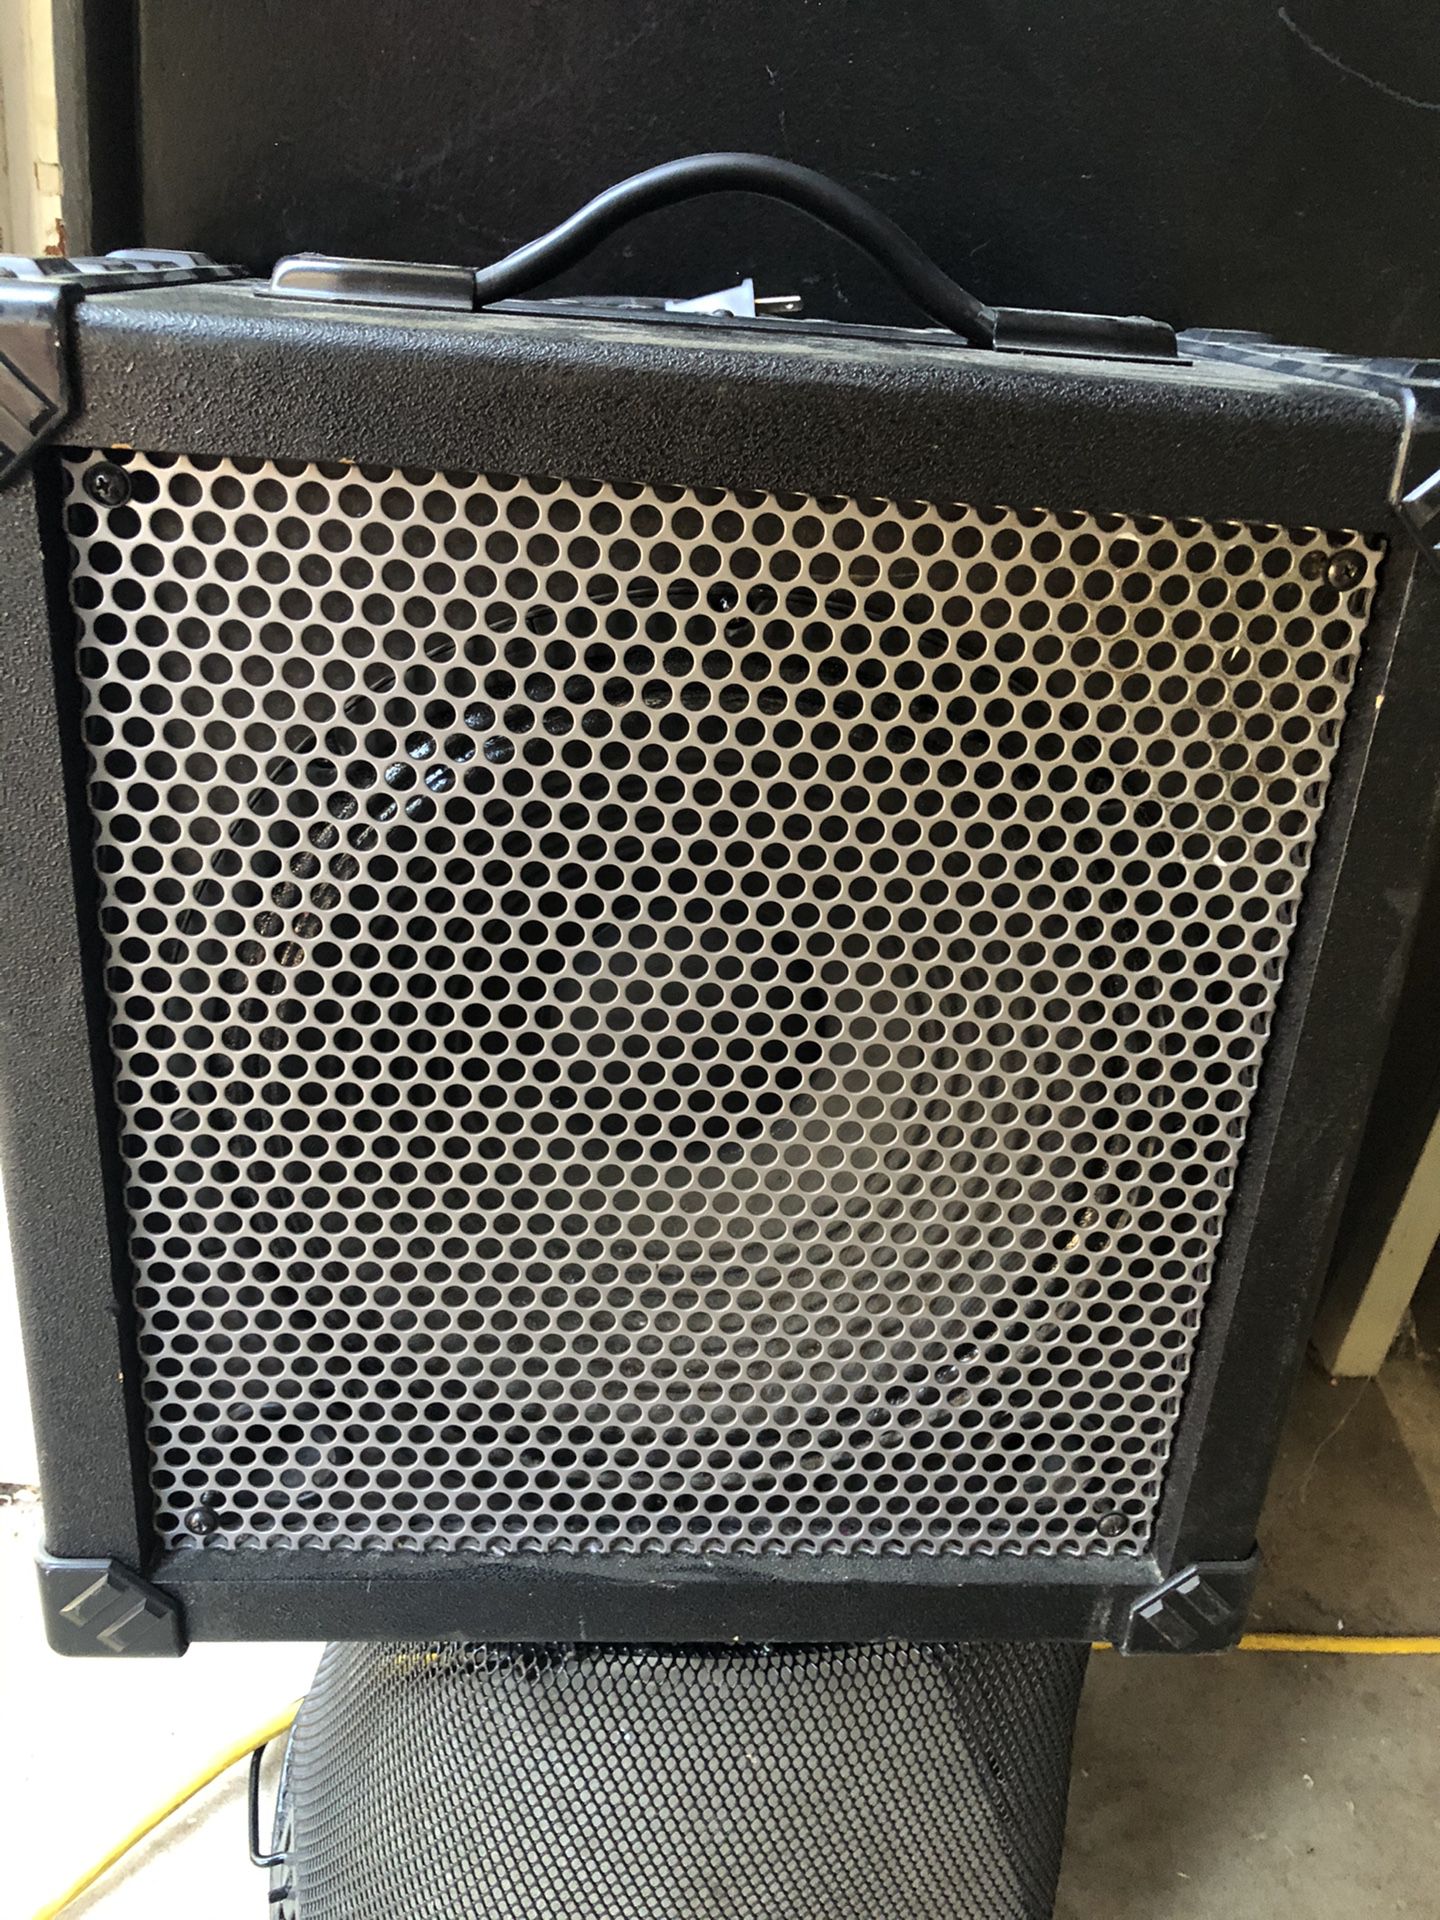 Roland Cube-60 amplifier